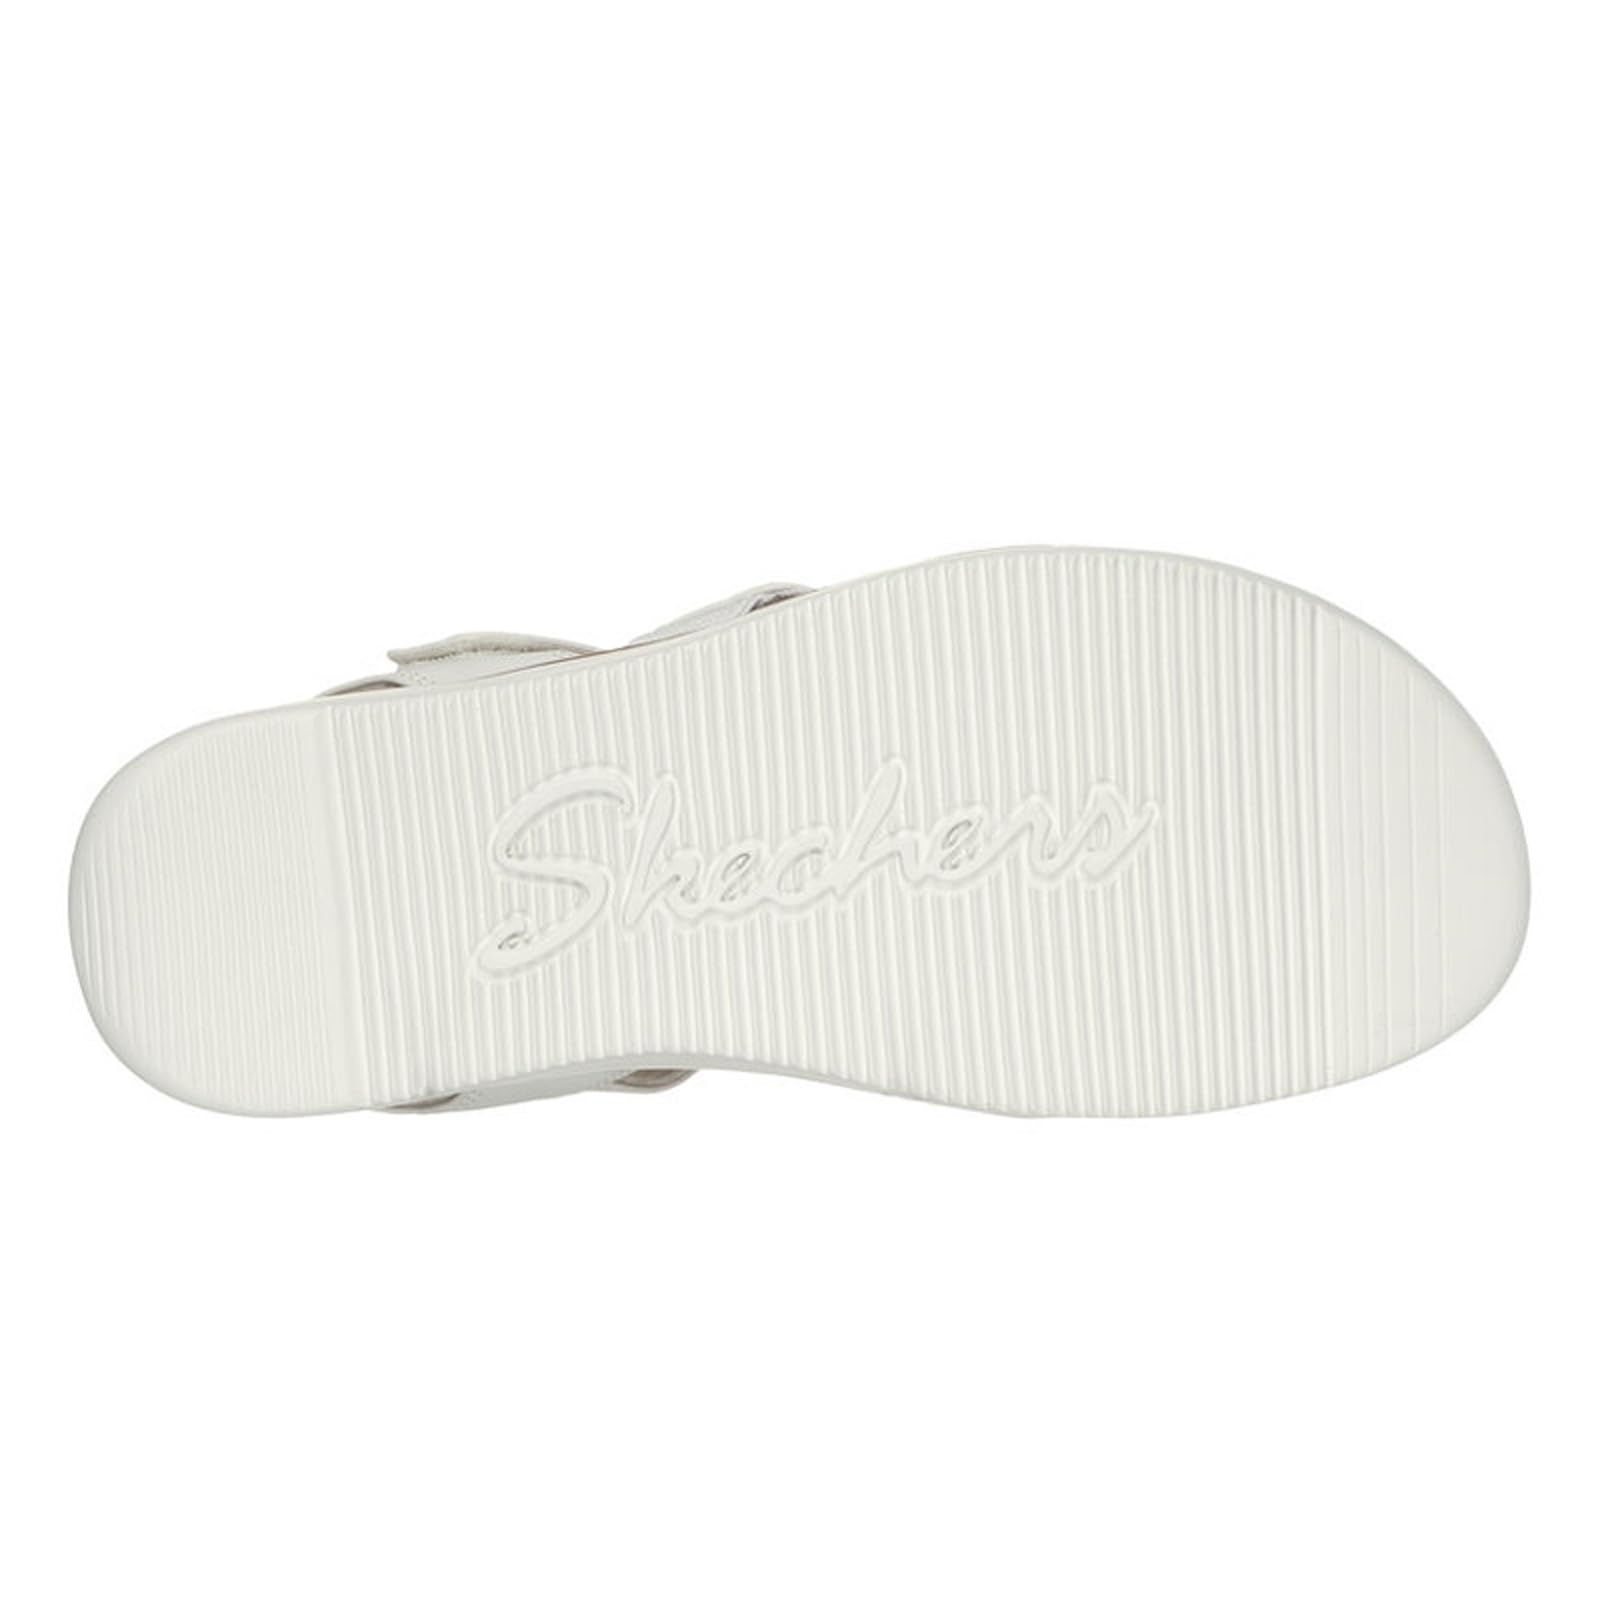 Skechers Women's Lifted Comfort Sandal